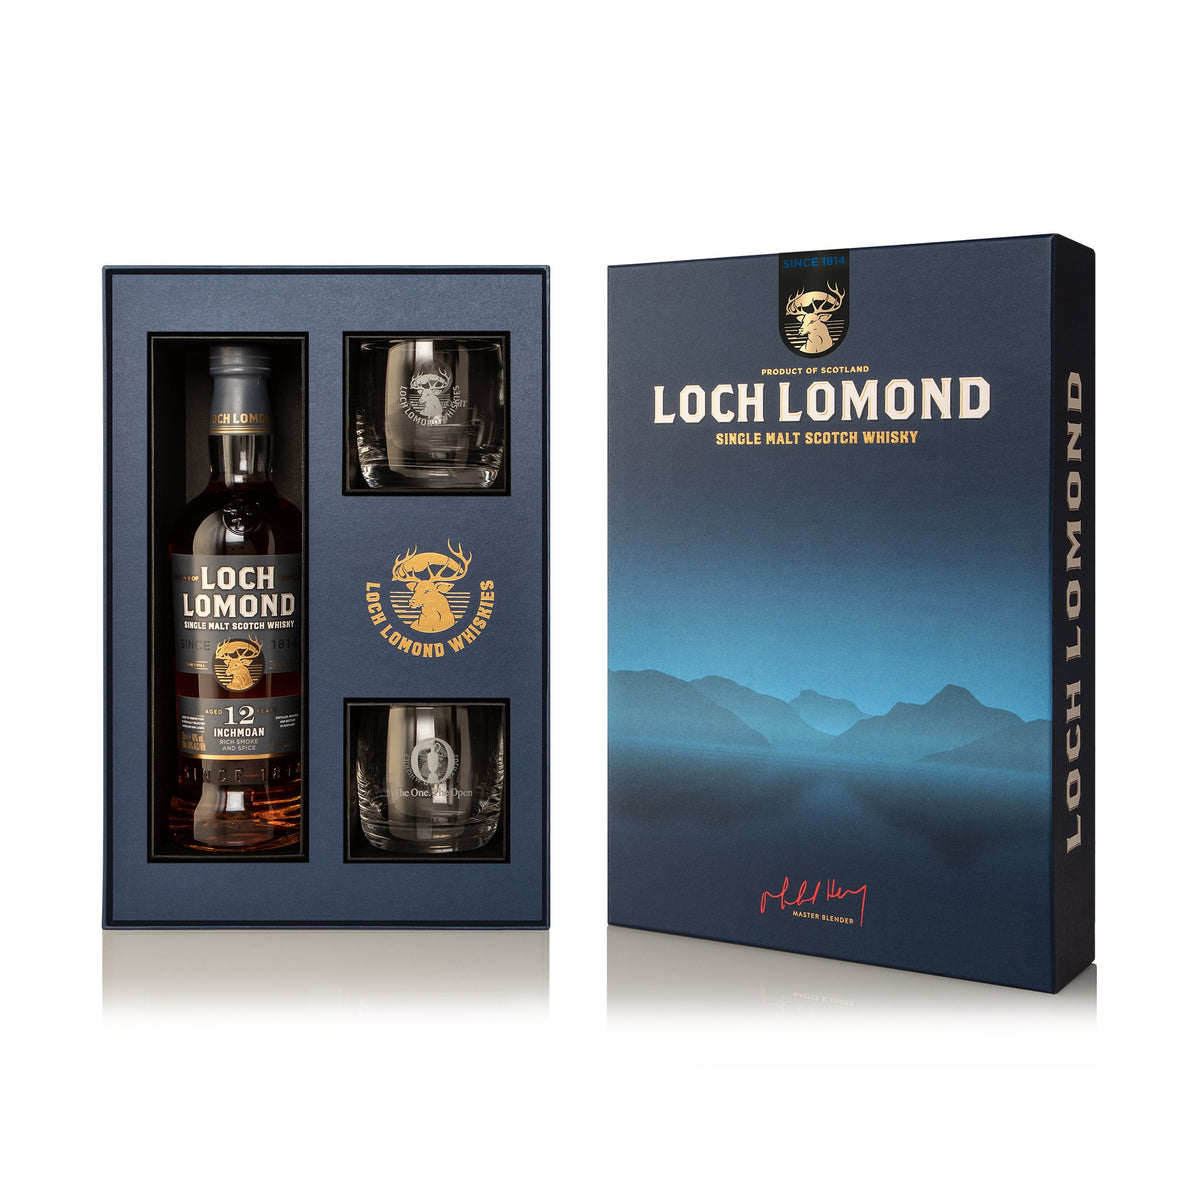 Loch Lomond 12 Year Old Inchmoan Whisky &amp; Glass Box Set (70cl) - Loch Lomond Group